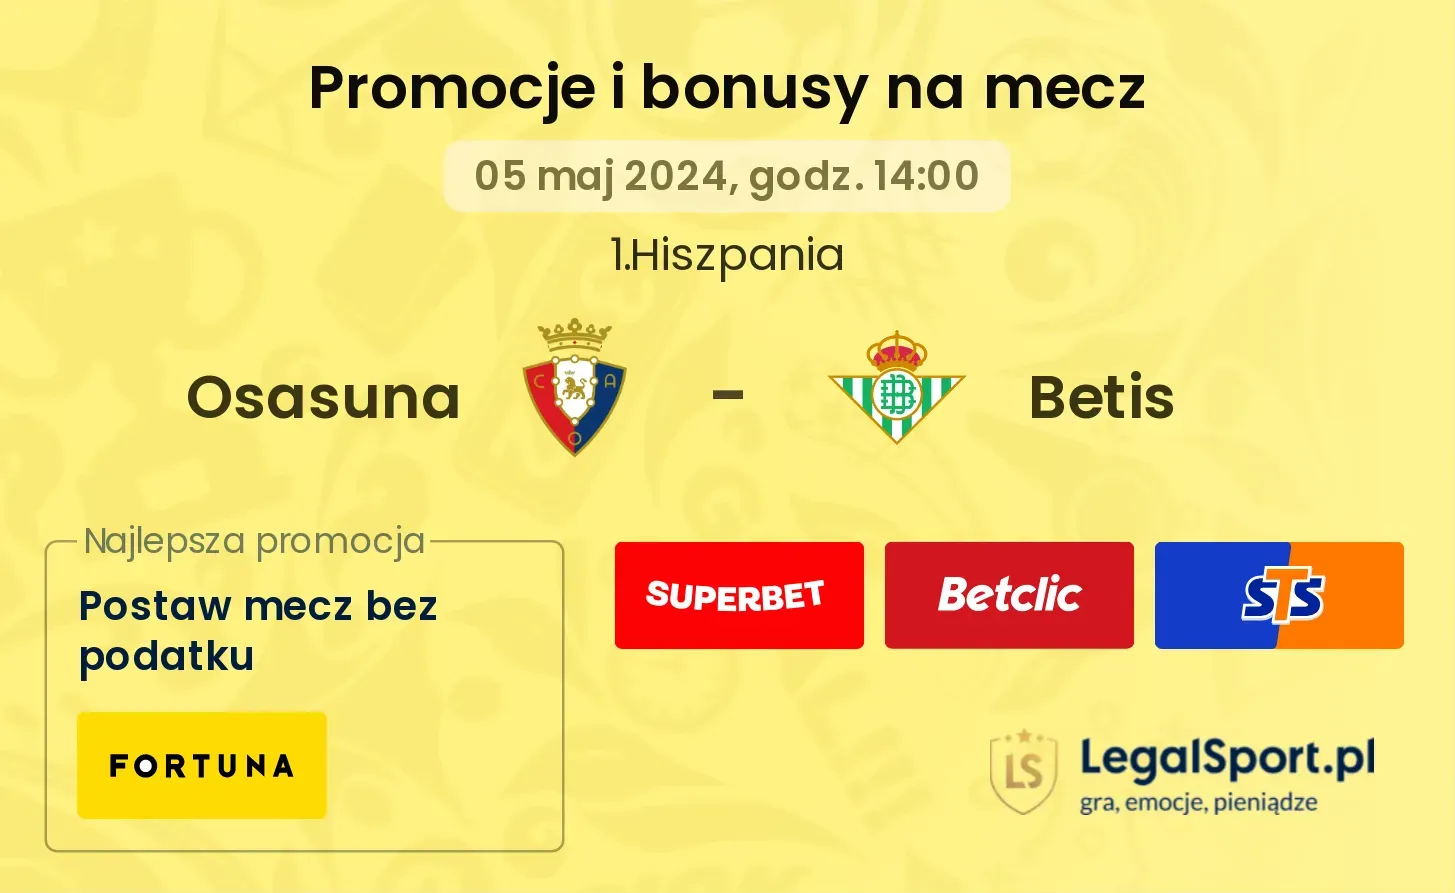 Osasuna - Betis promocje bonusy na mecz